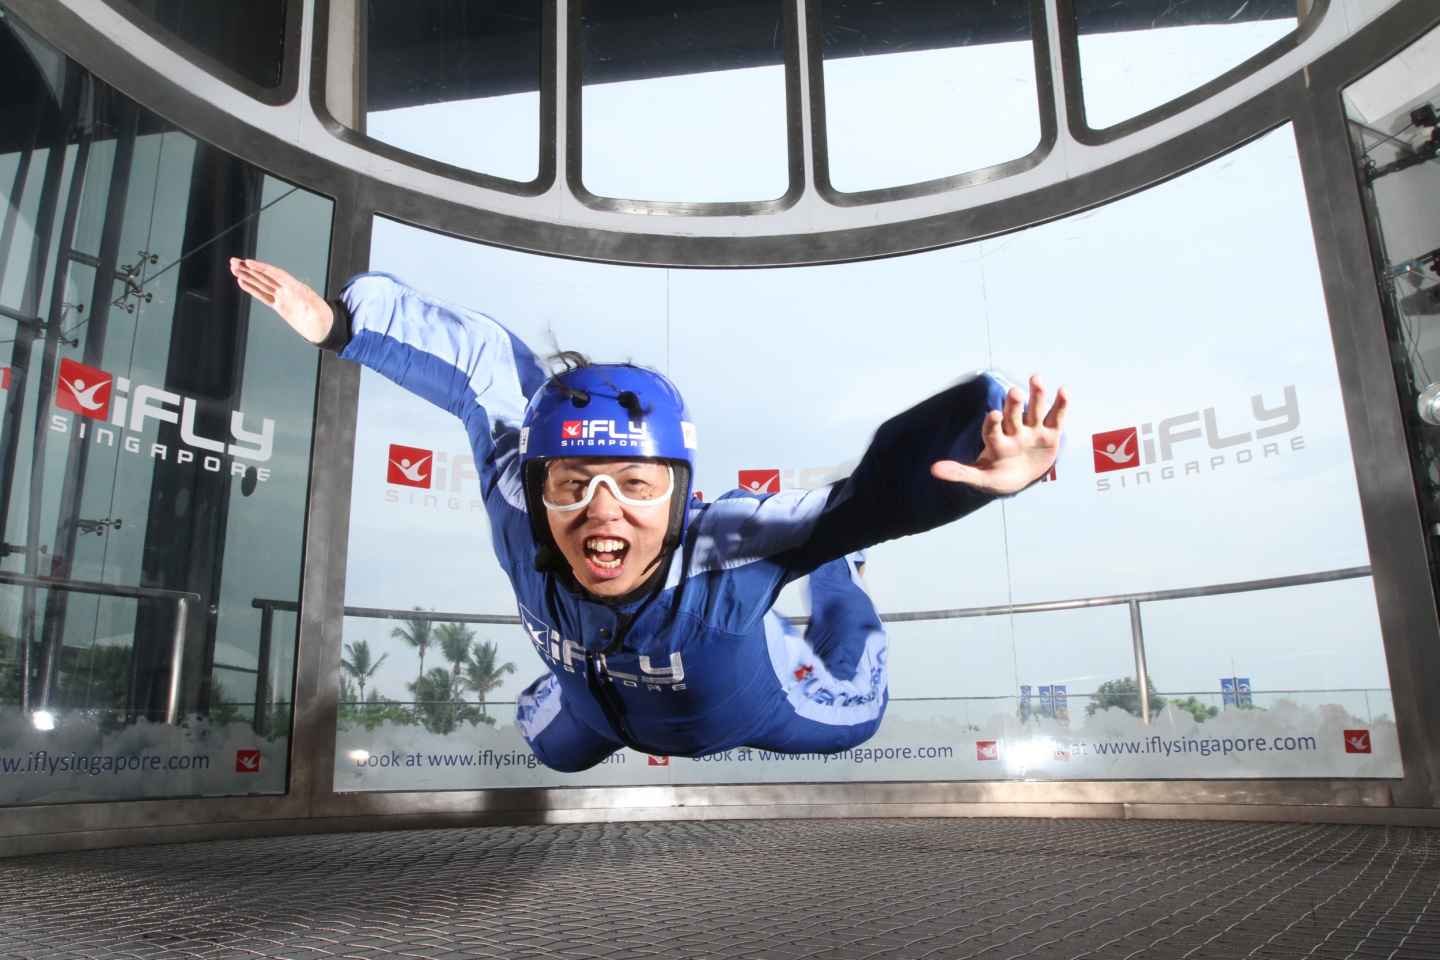 Singapur: I-Fly Indoor Skydiving Ticket